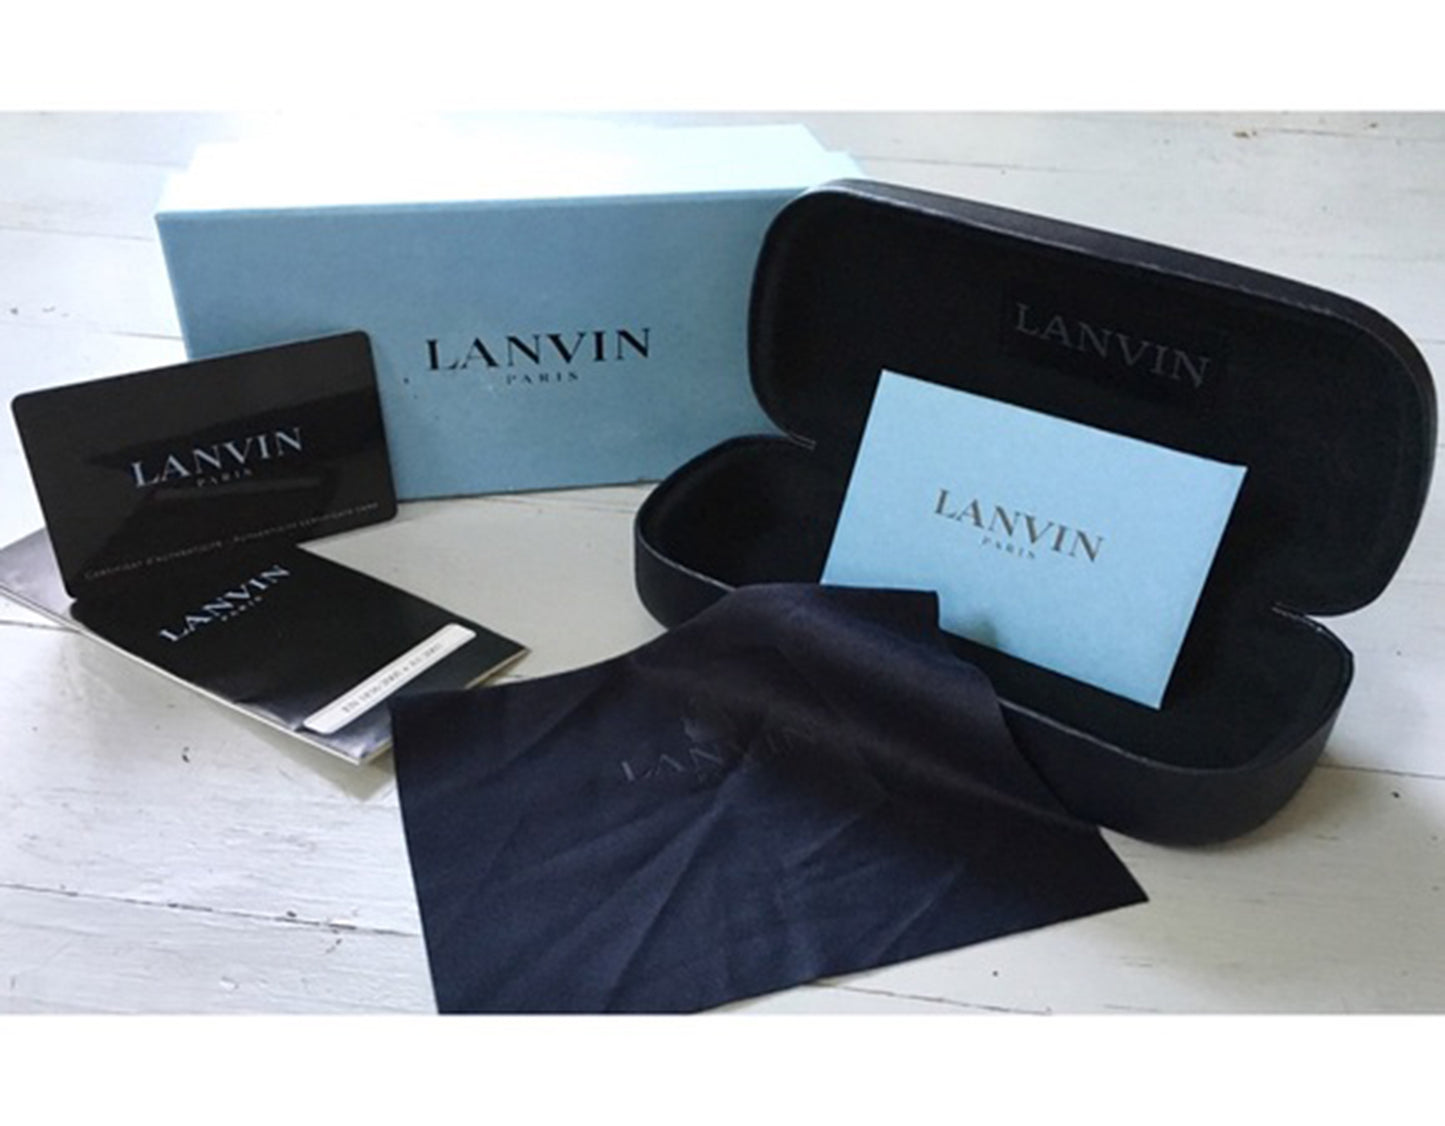 Lanvin VLN747M-0752-52 52mm New Eyeglasses